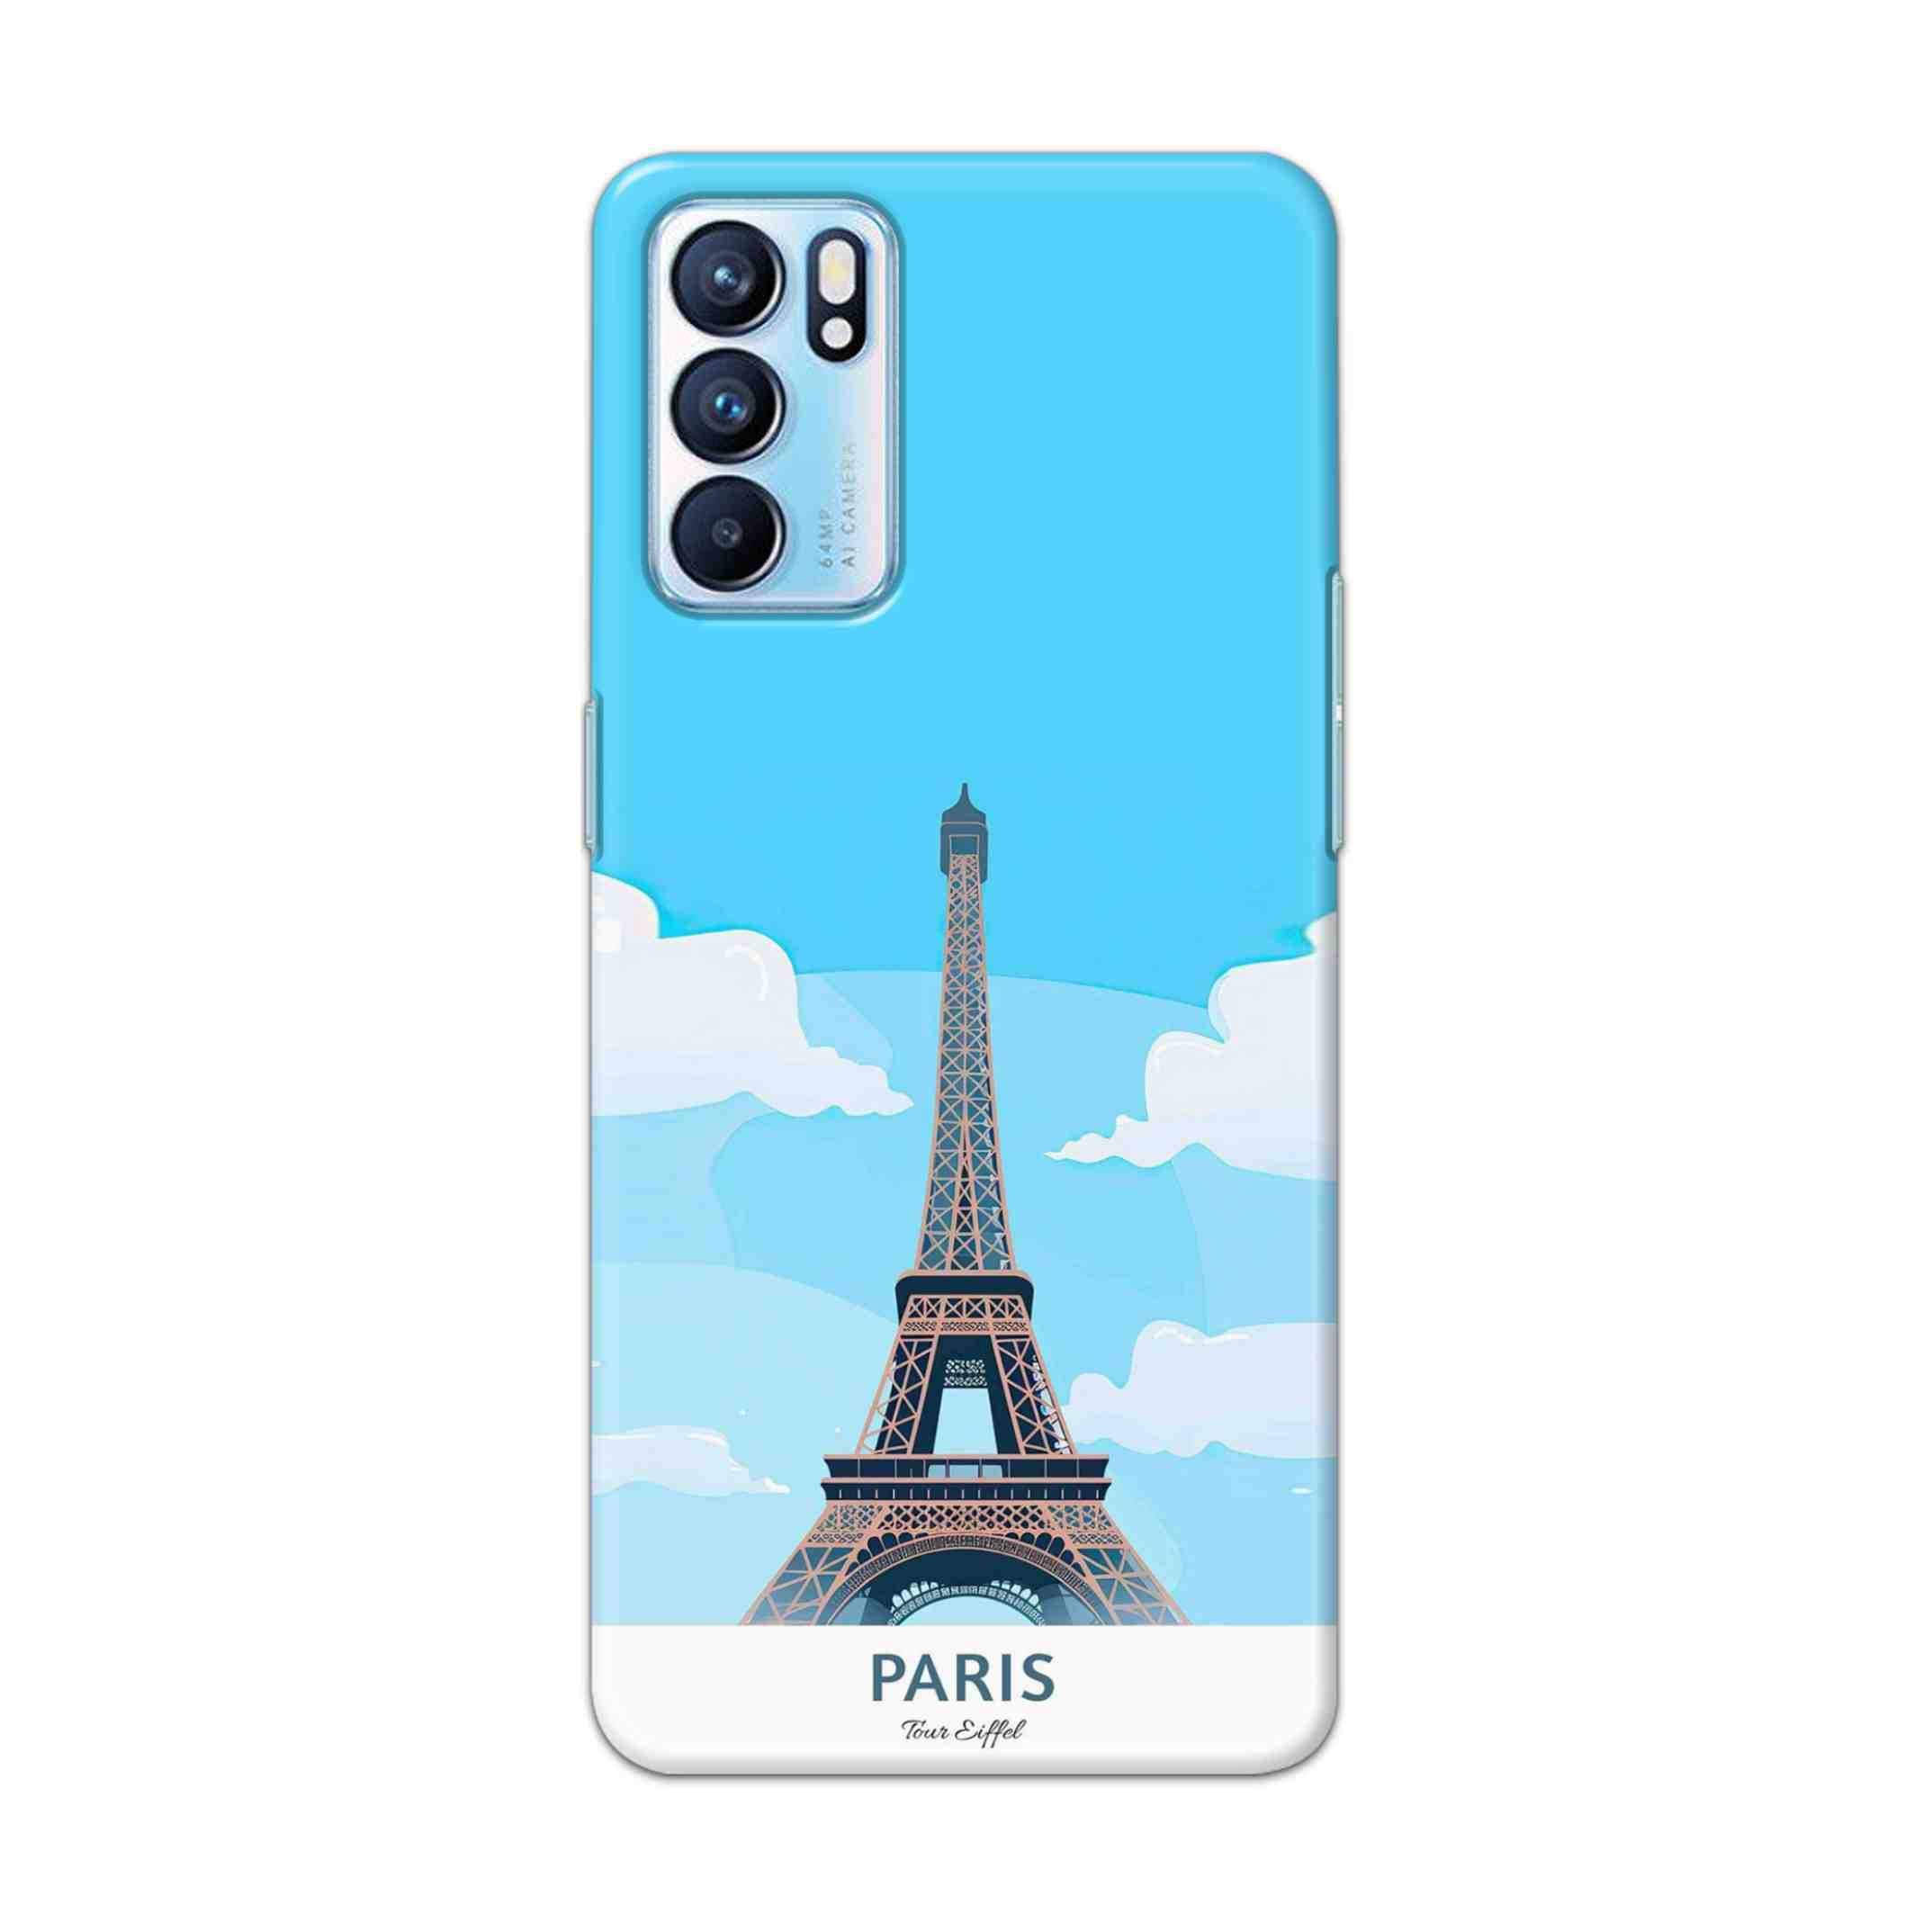 Buy Paris Hard Back Mobile Phone Case Cover For OPPO RENO 6 5G Online